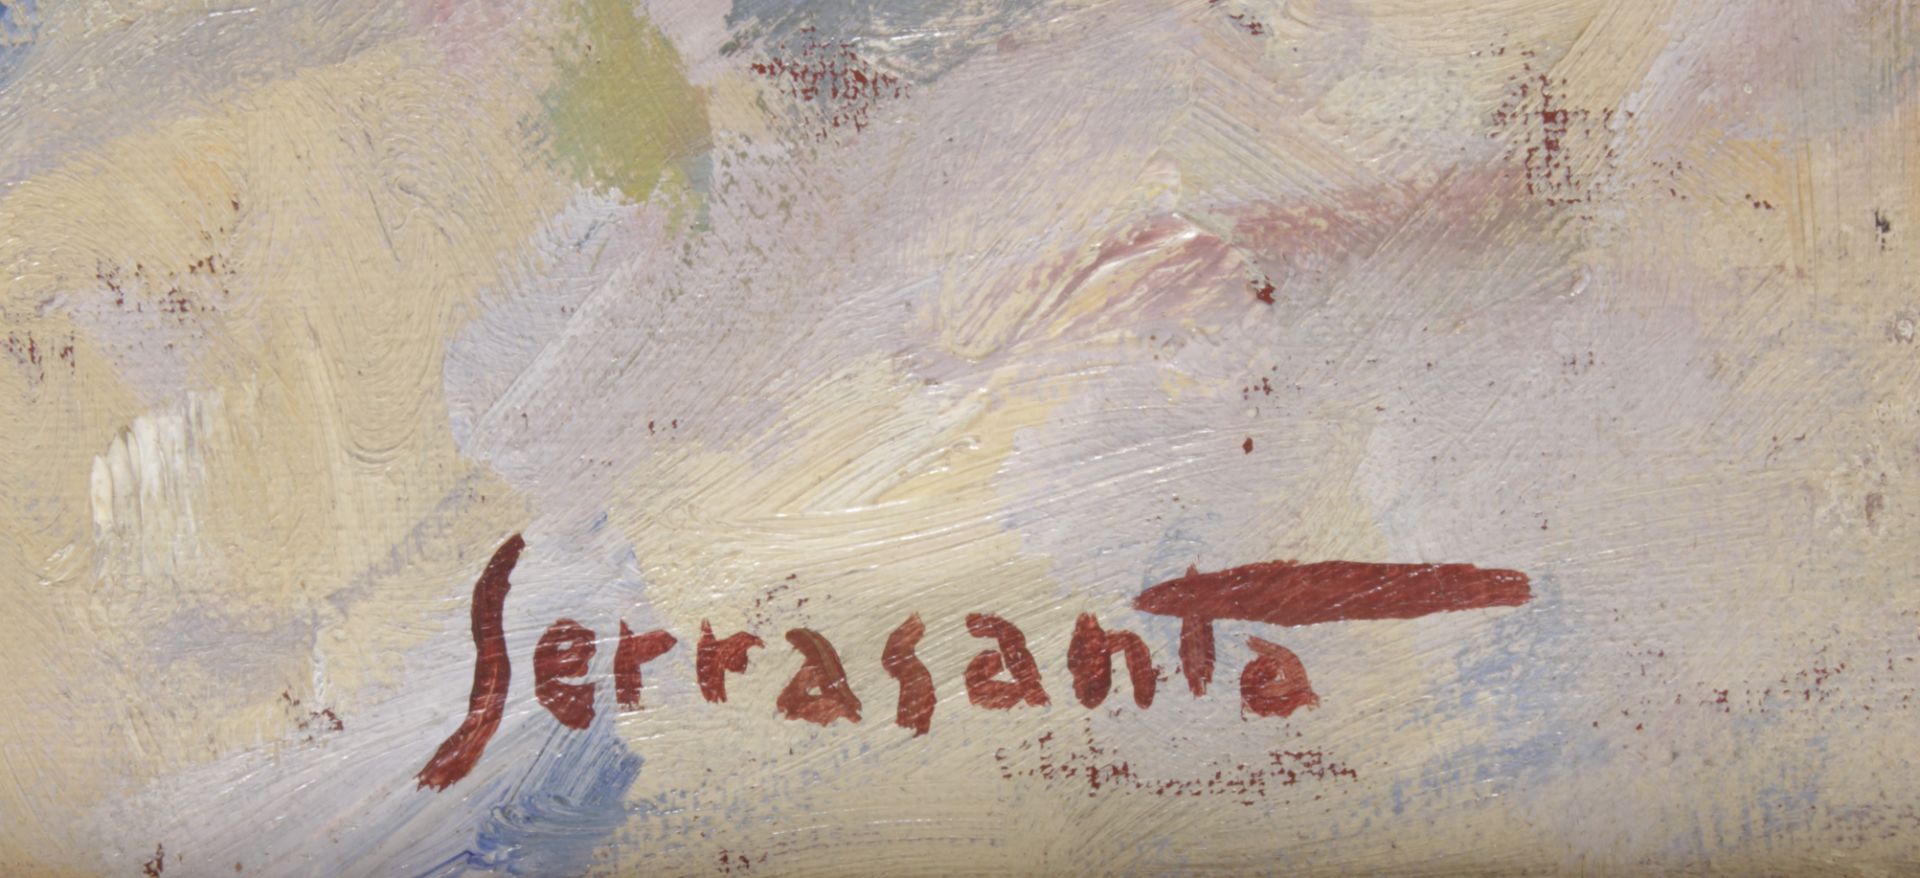 Josep Serrasanta - Image 3 of 4